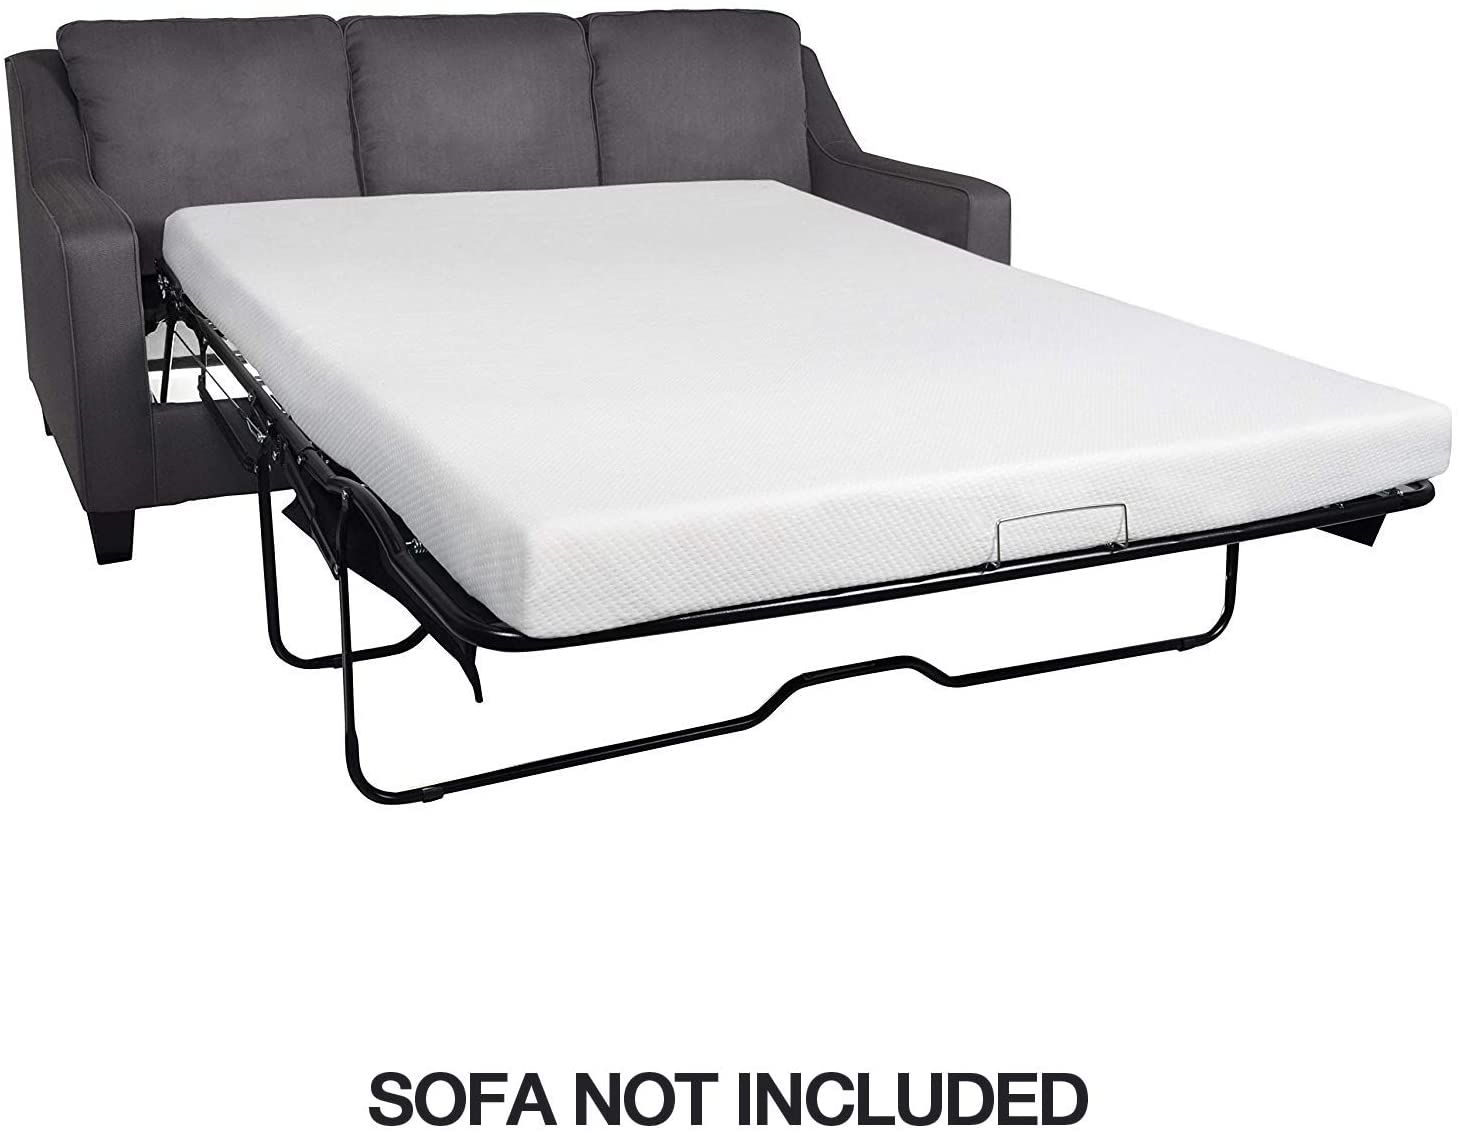 4 inch sofa bed mattress